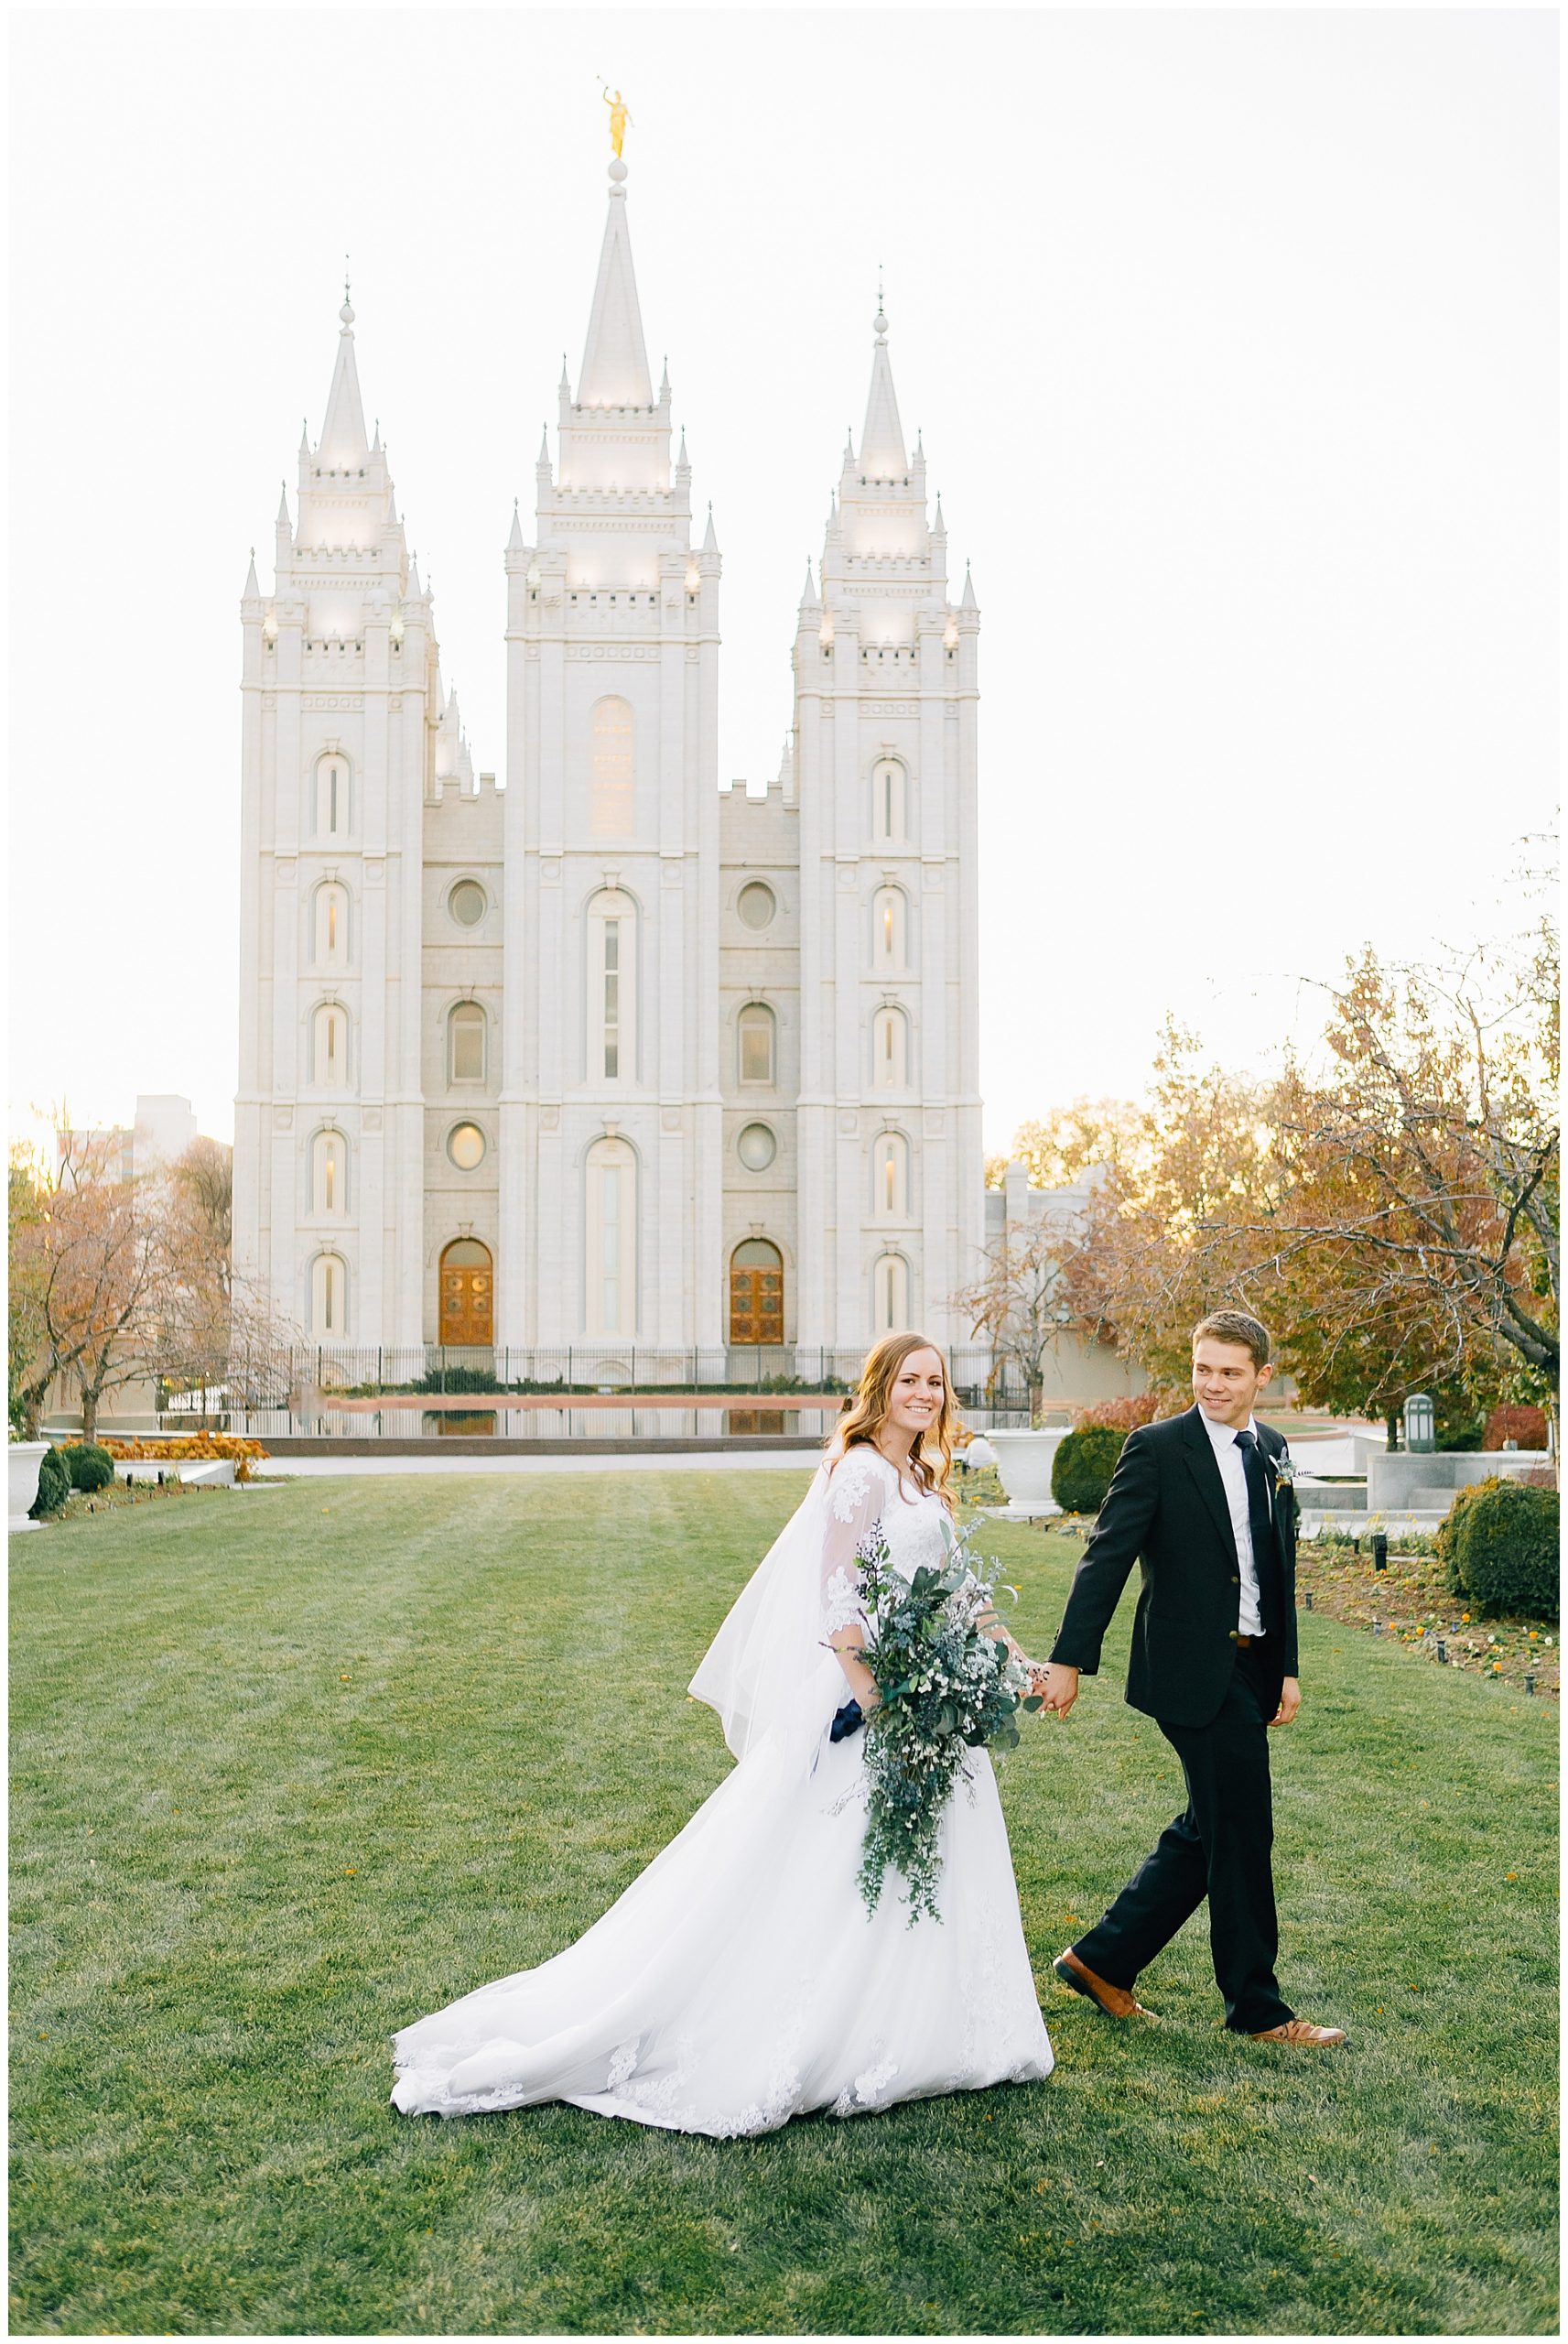 Sav + Noah | Salt Lake Temple Wedding